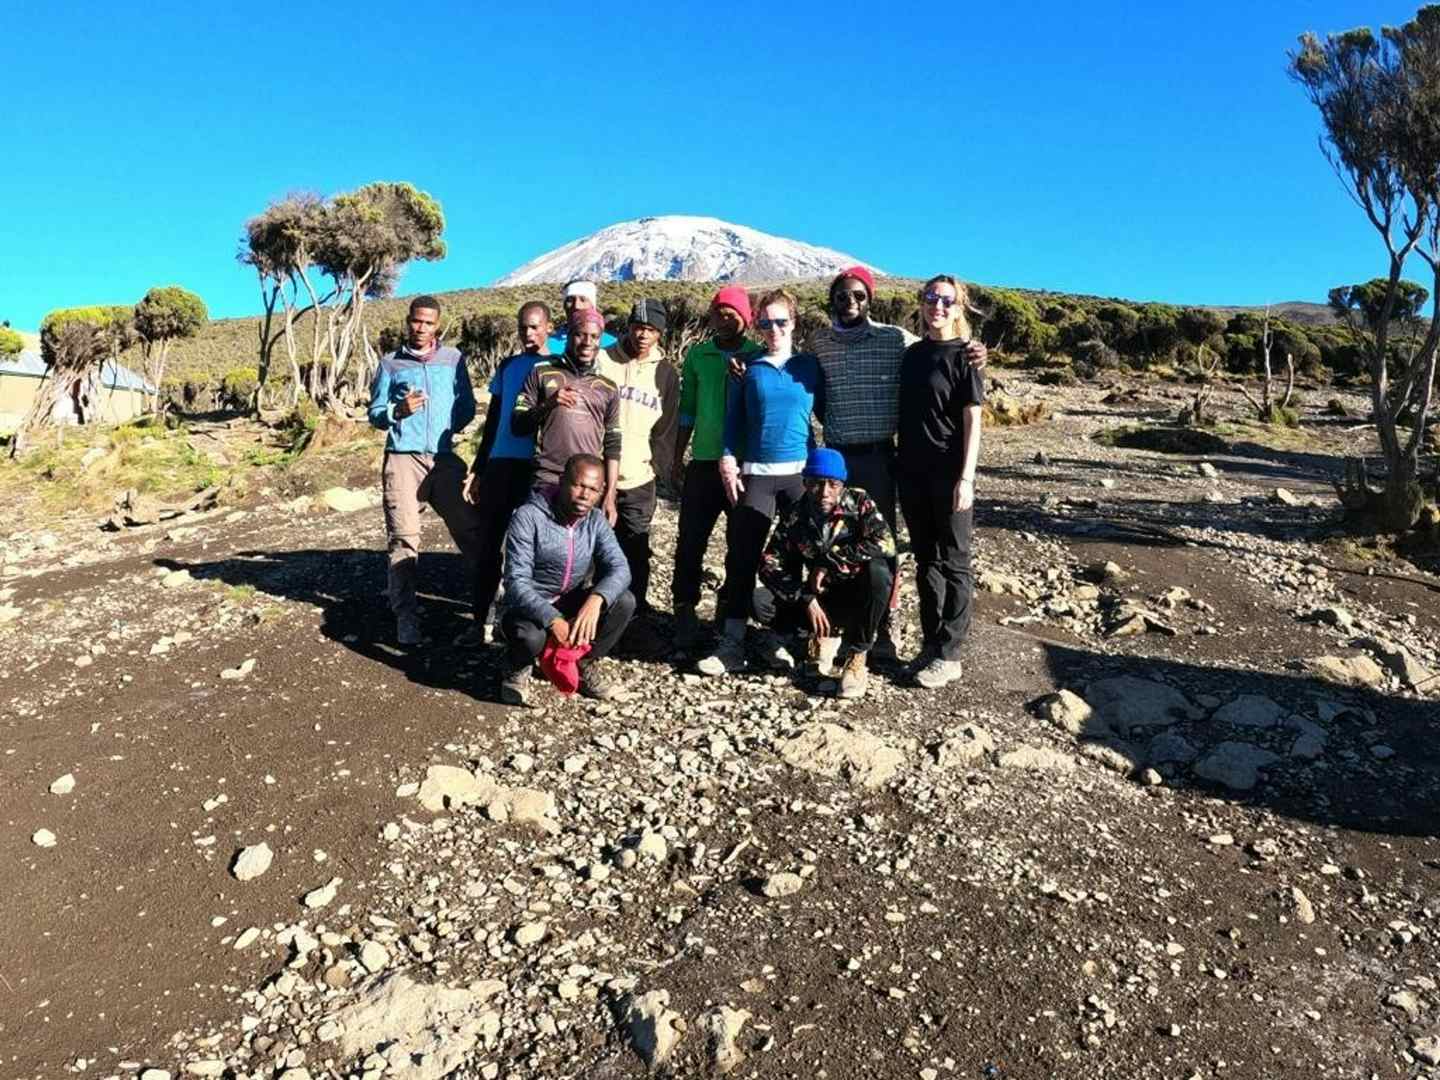 The Kilimanjaro trek was incredible! So bea...